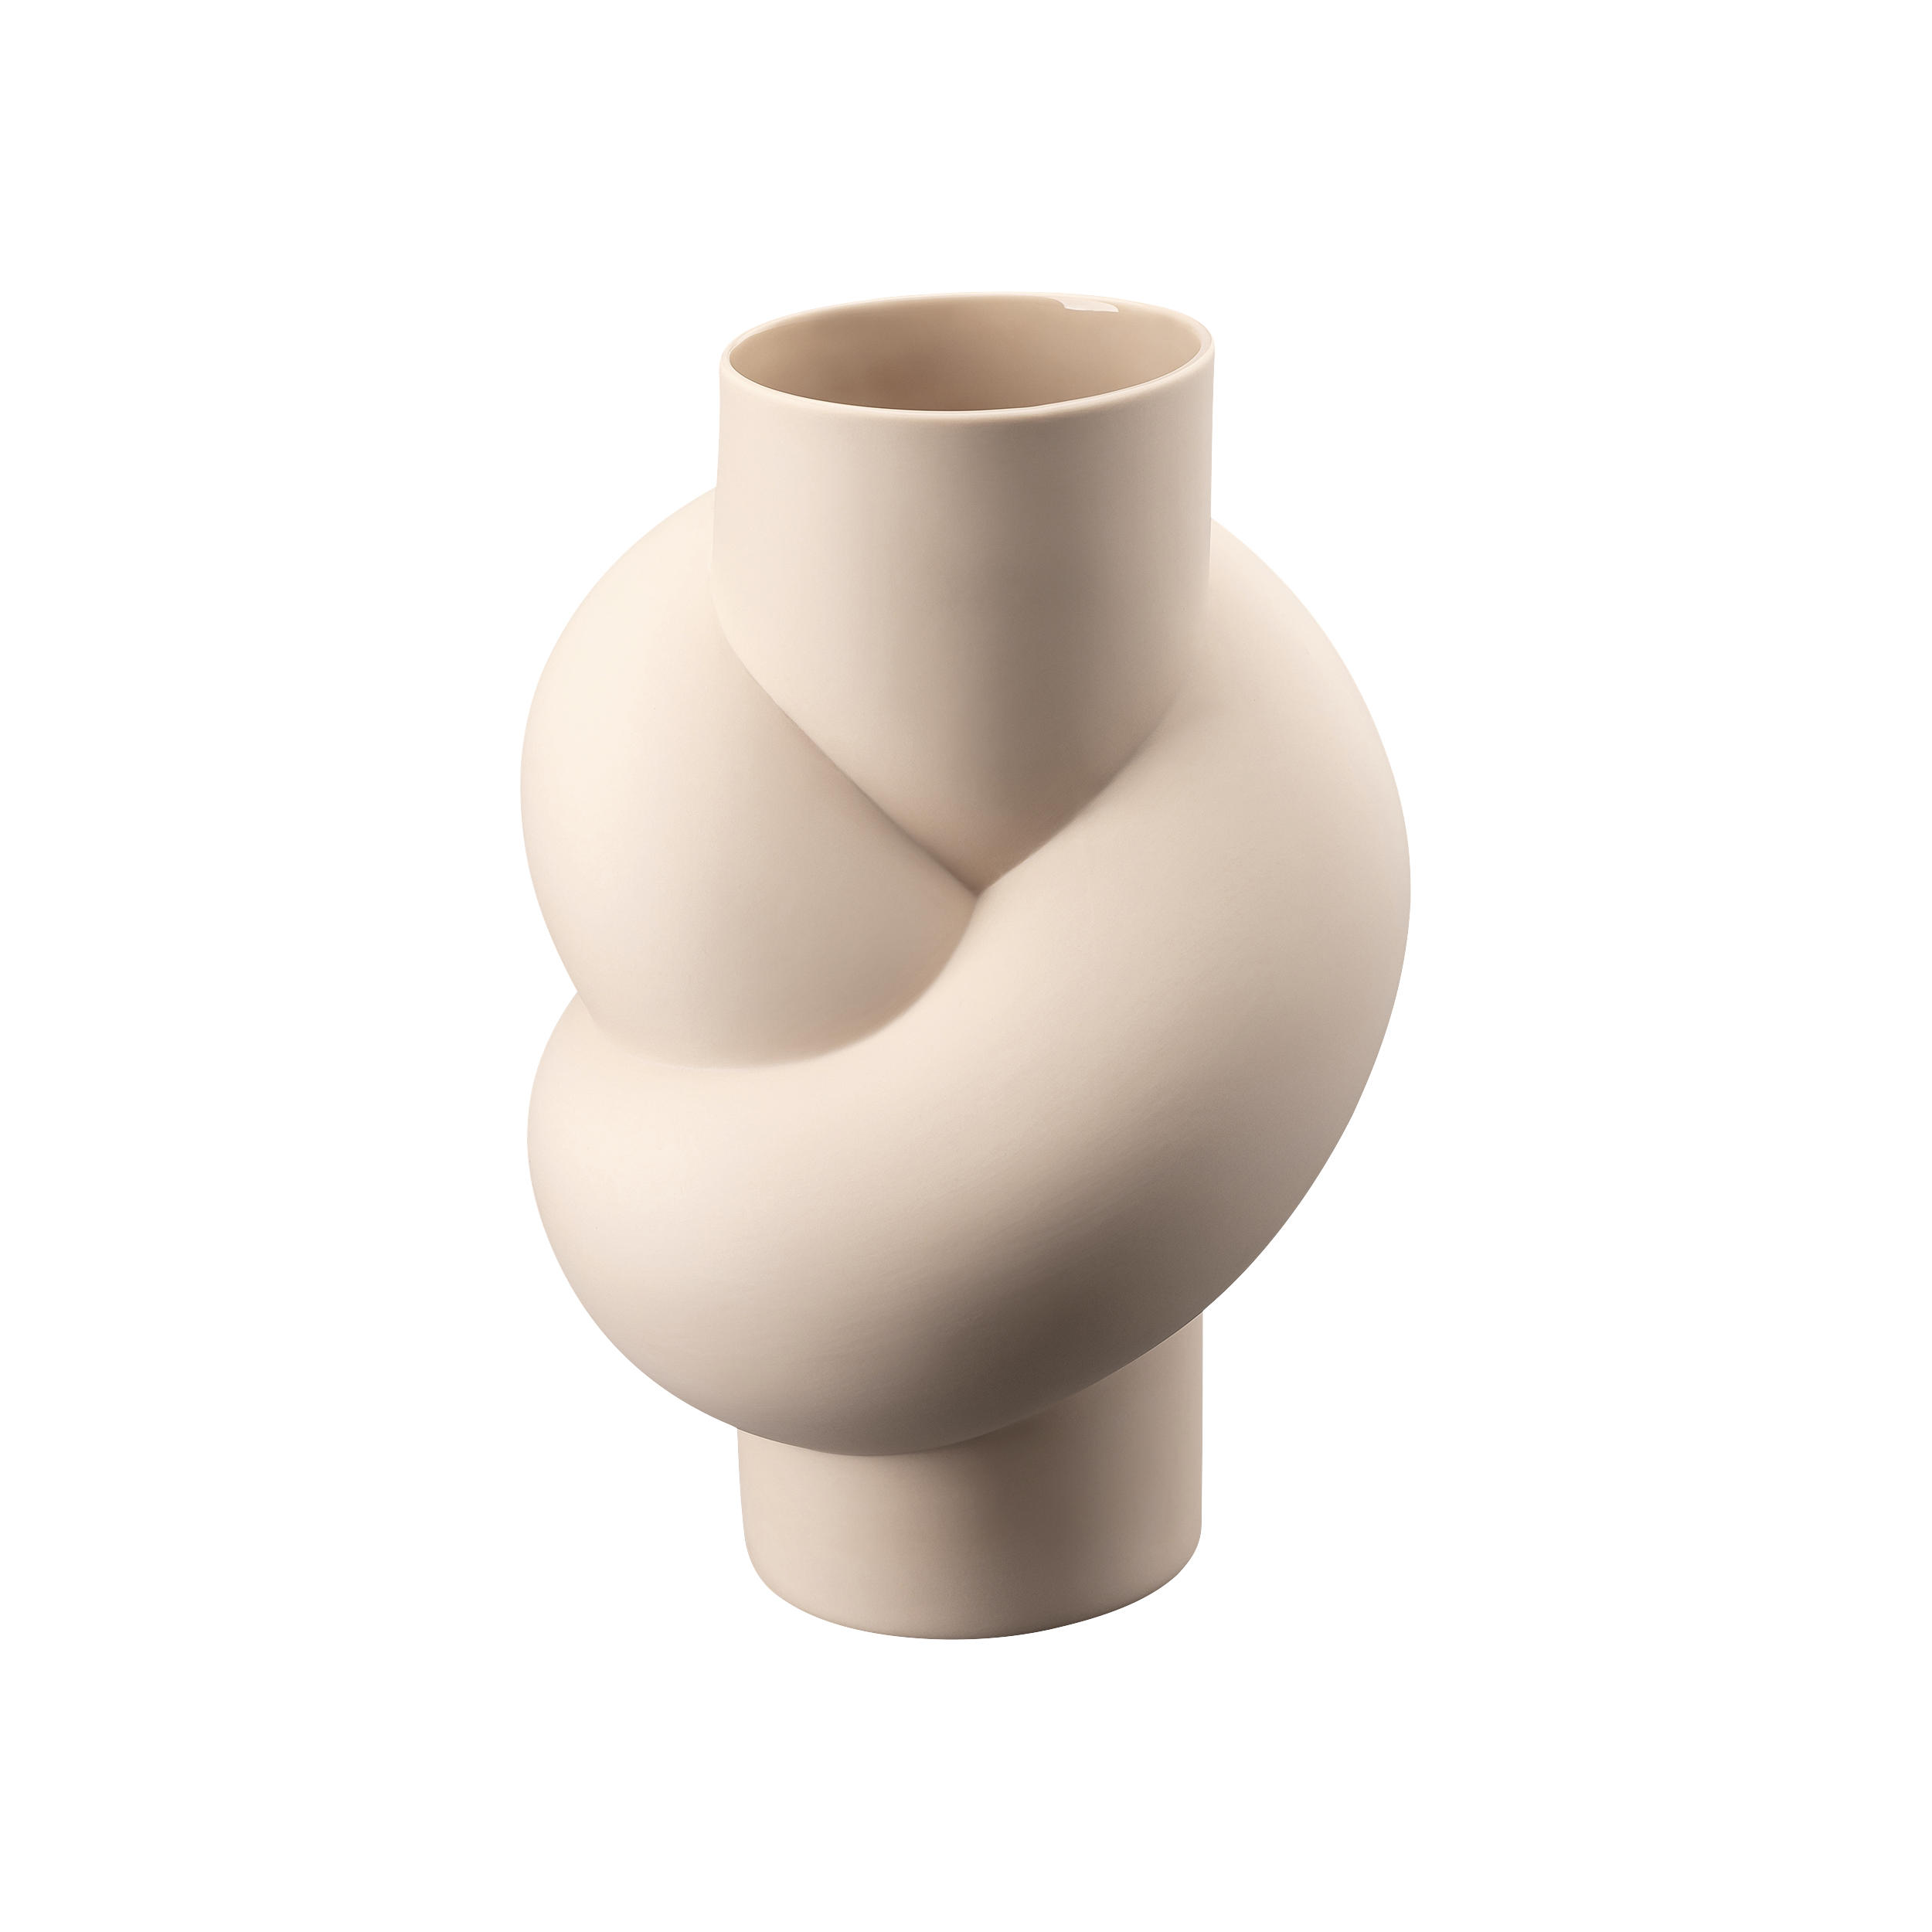 VAZA   25/20/20 cm   keramika  - Osnovno, keramika (25/20/20cm) - Rosenthal